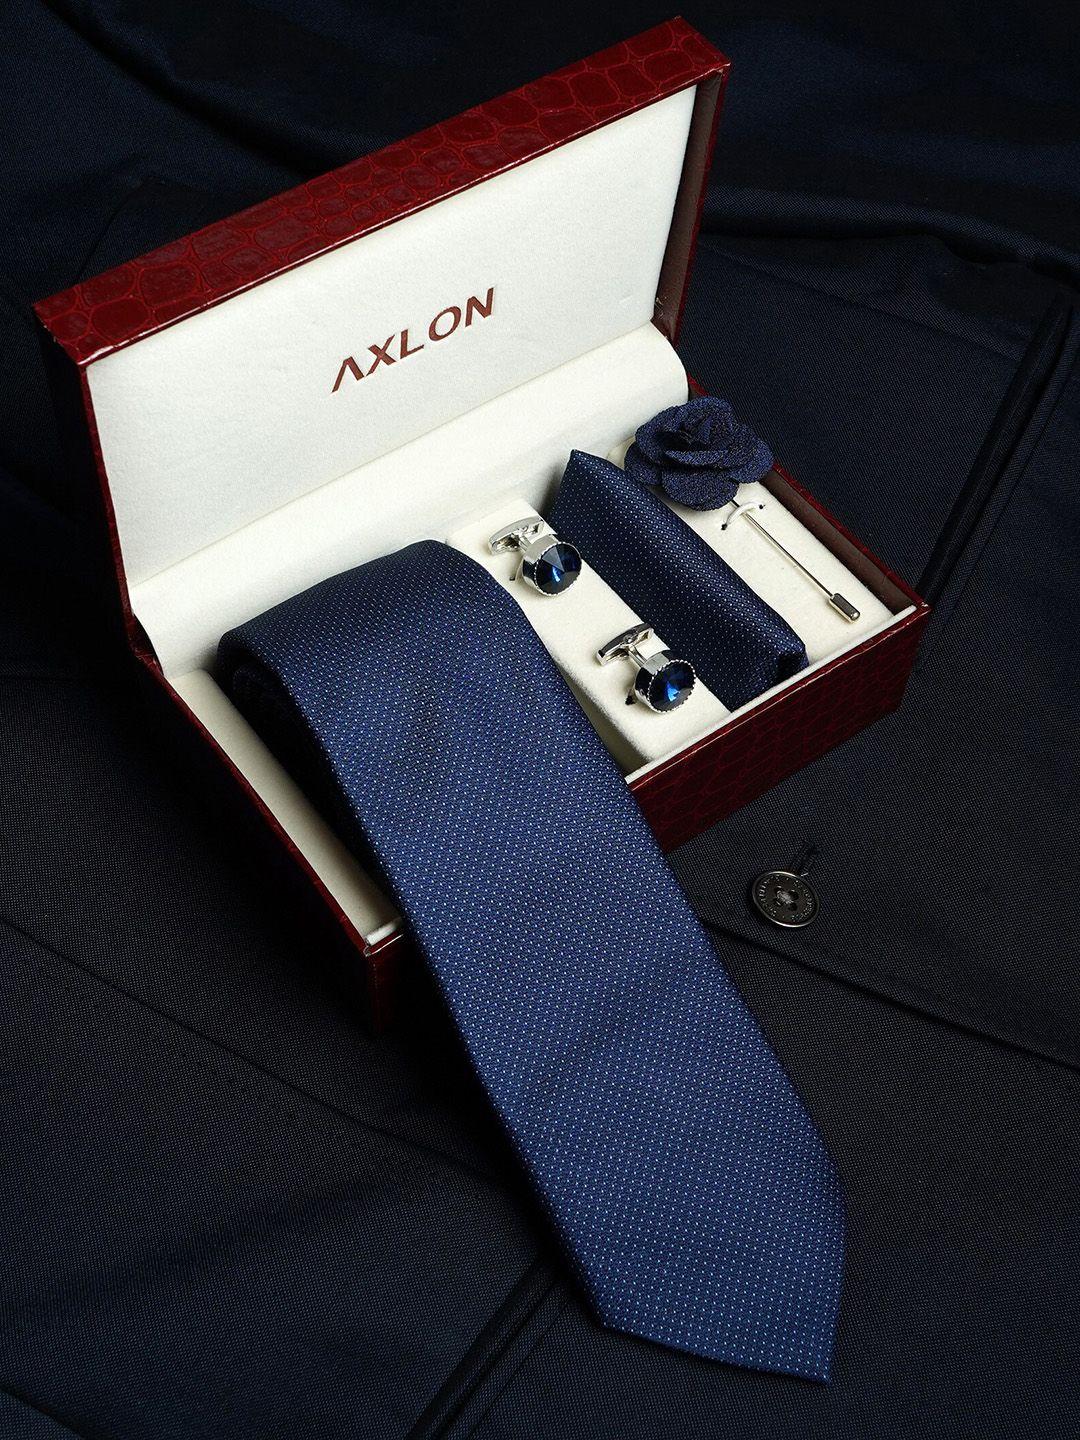 axlon men printed tie set with pocket square, cufflink & flower pin